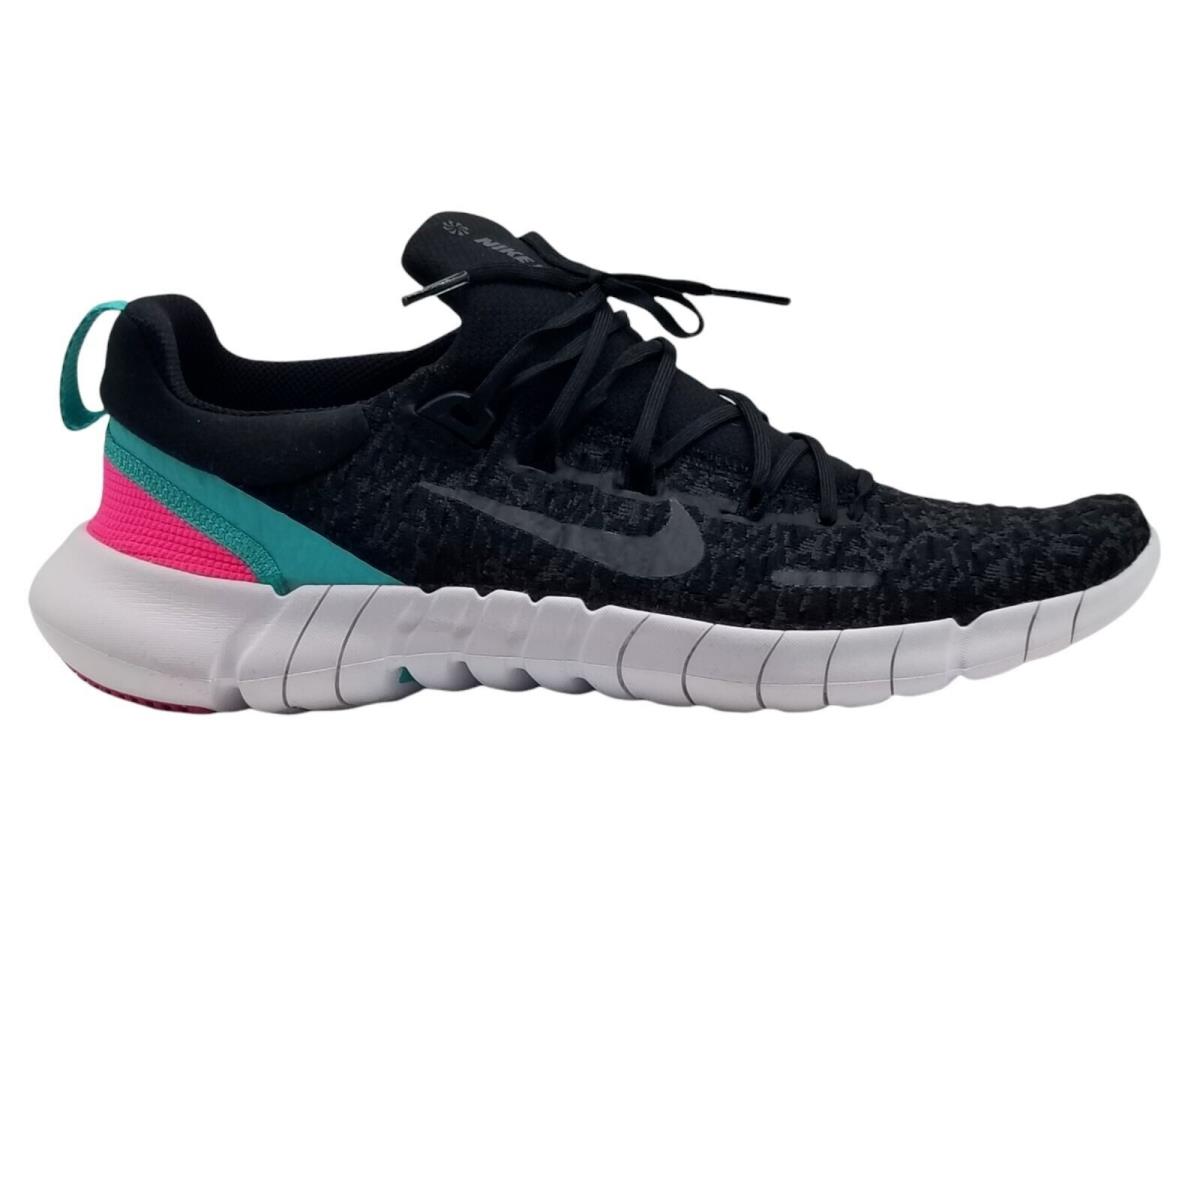 Nike Mens Free Run 5.0 Black Dynamic Turquoise Shoes Size 8.5